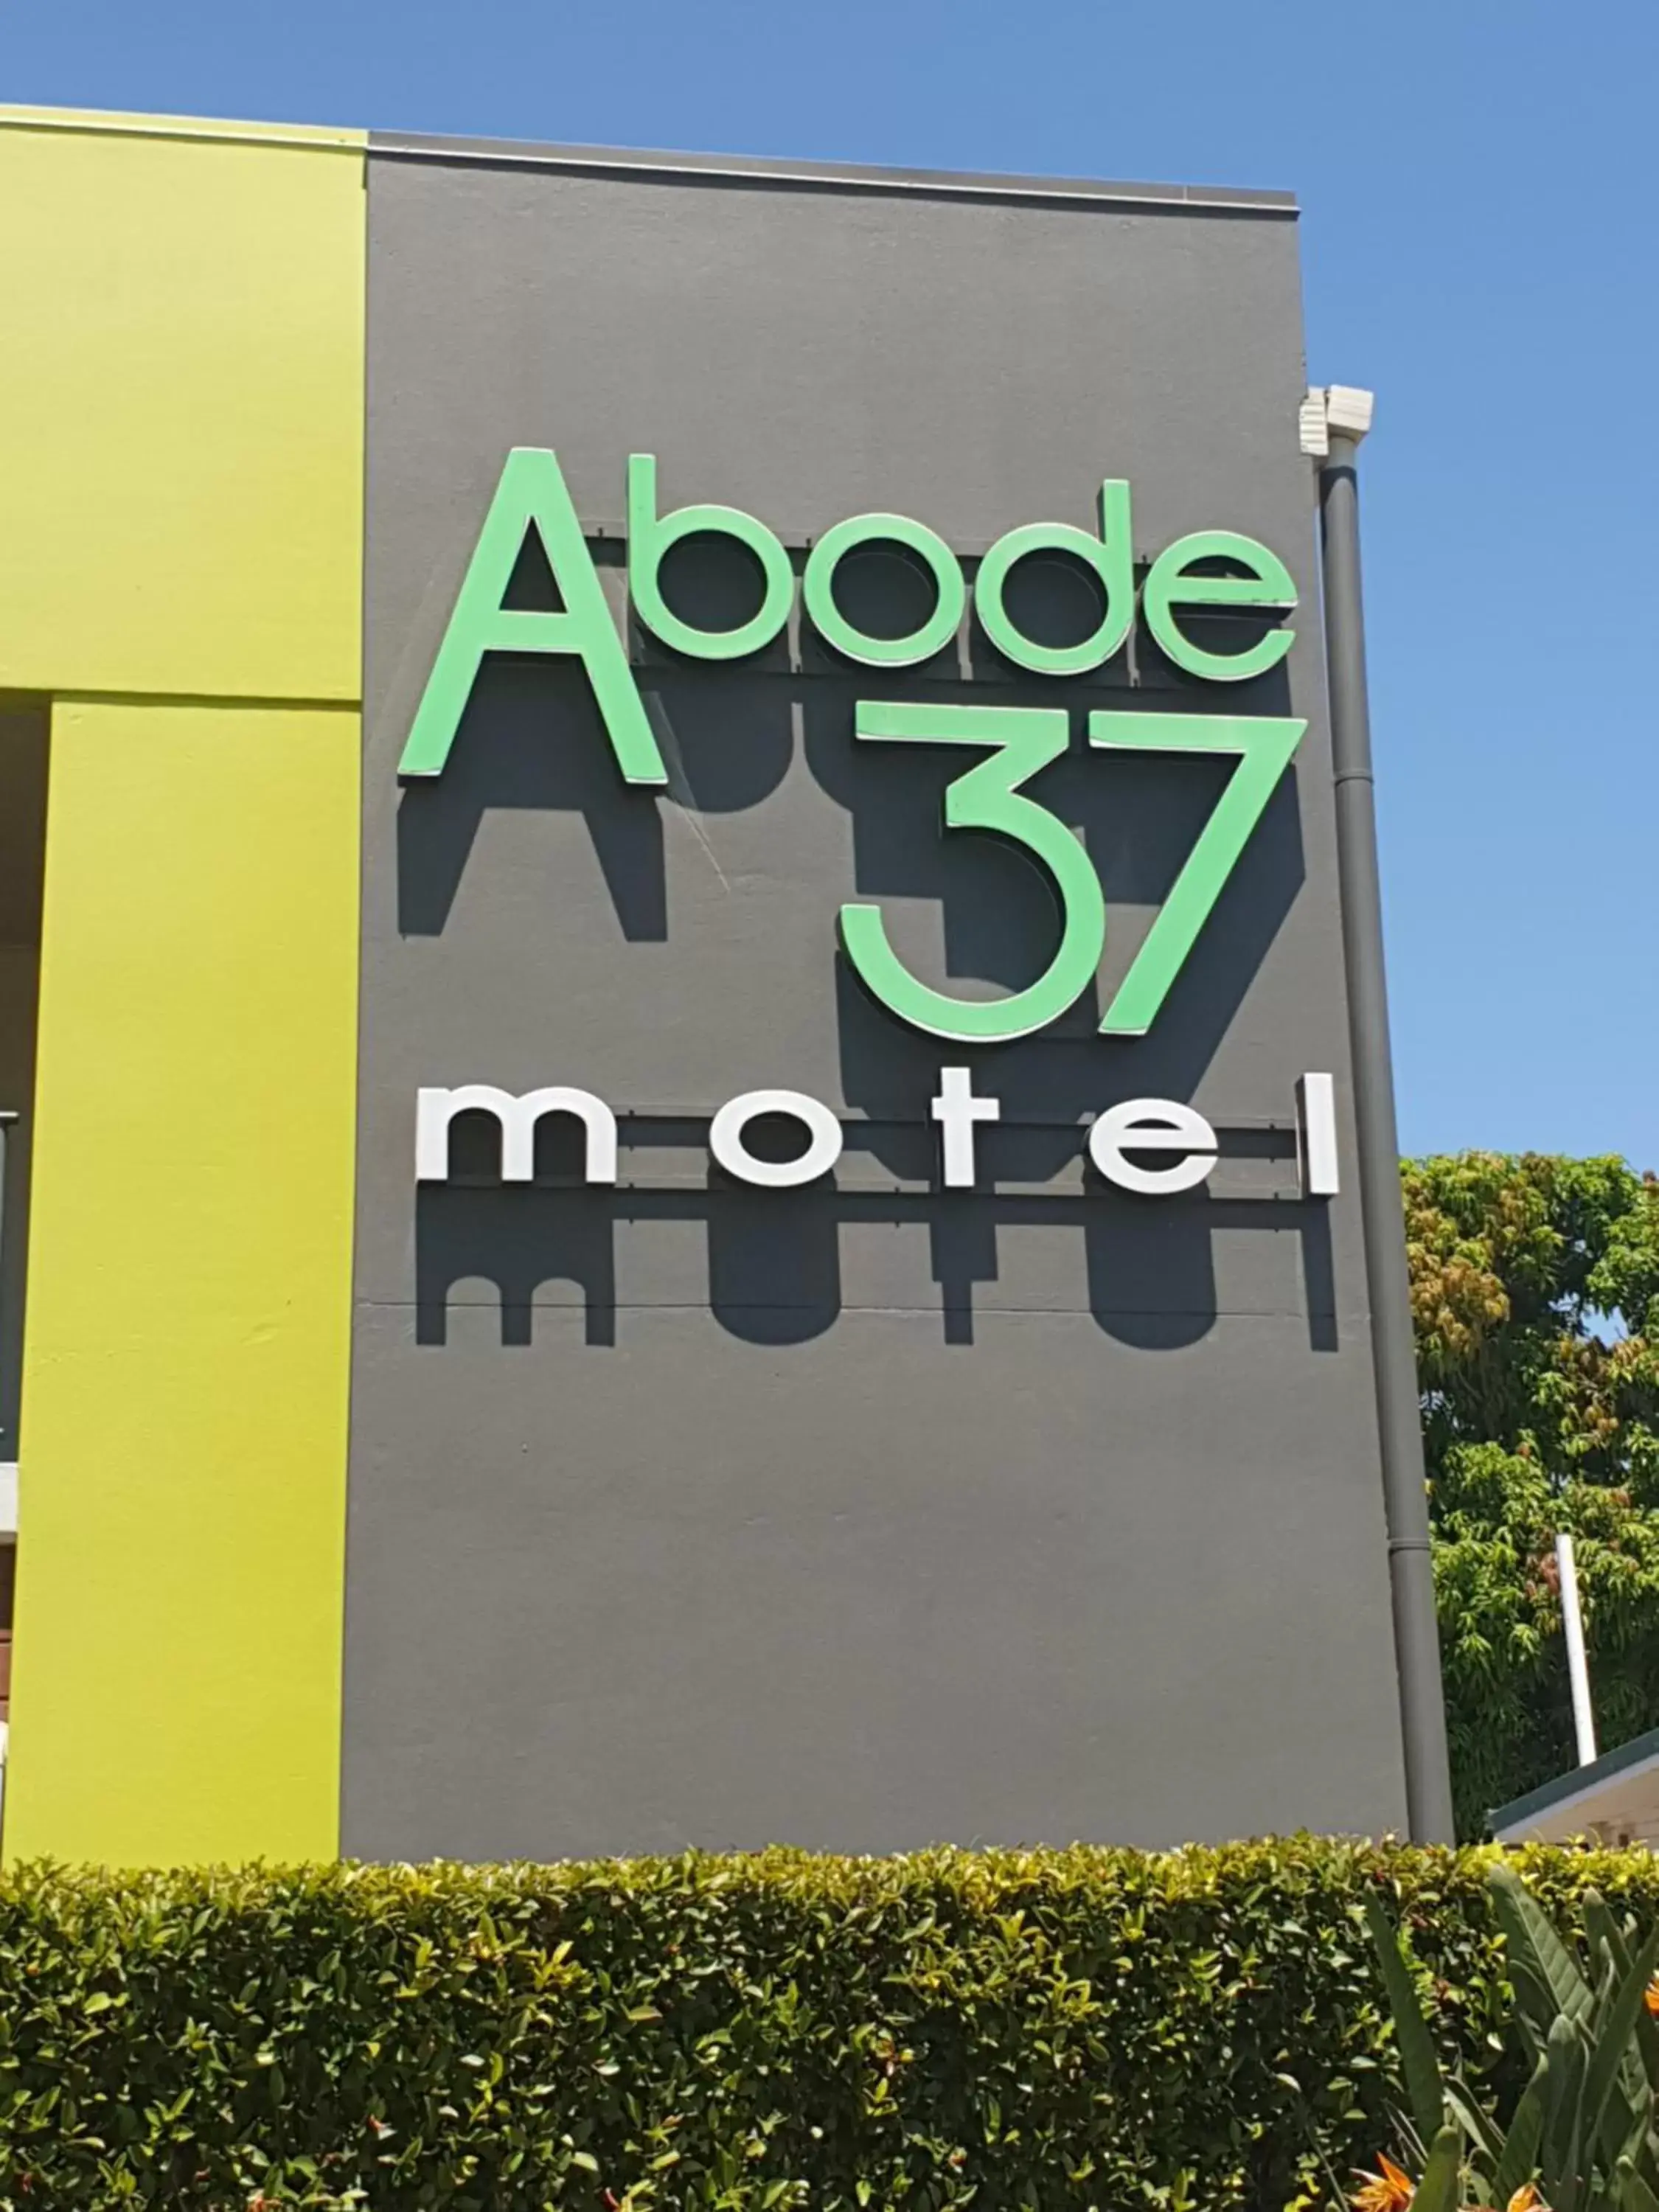 Property logo or sign in Abode37 Motel Emerald